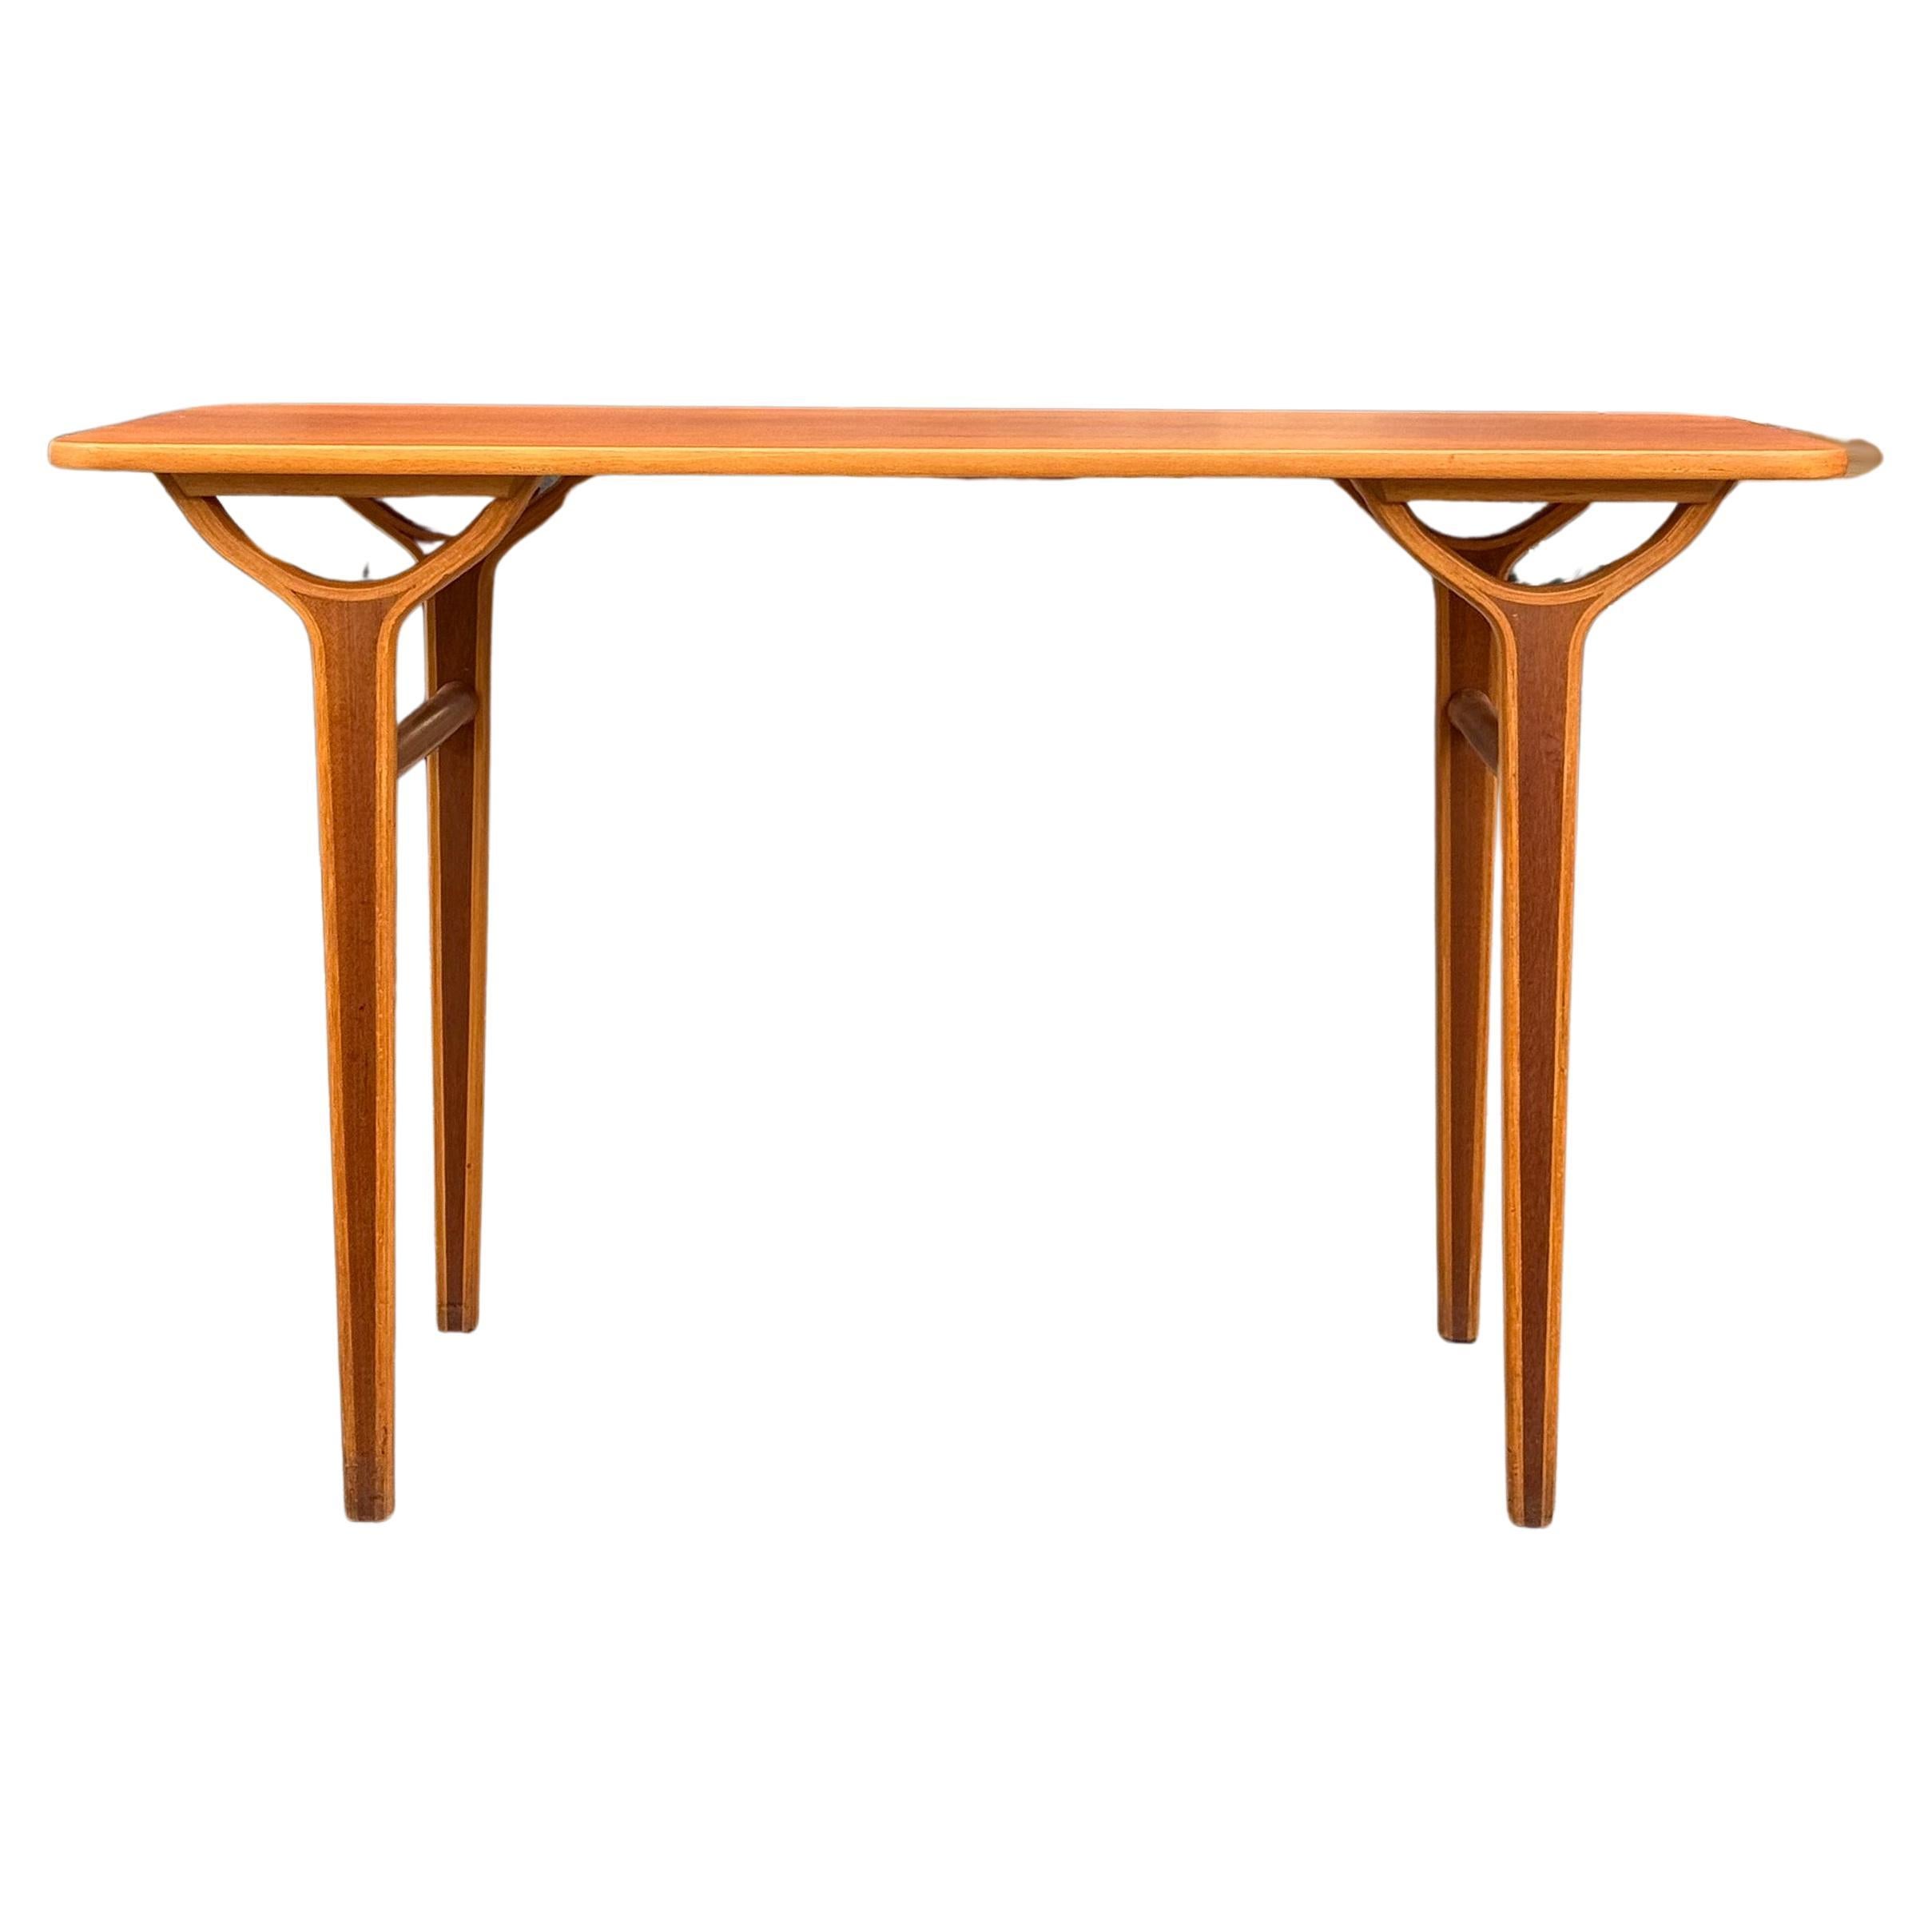 AX Table Hvidt & Mølgaard Denmark, 1950s For Sale